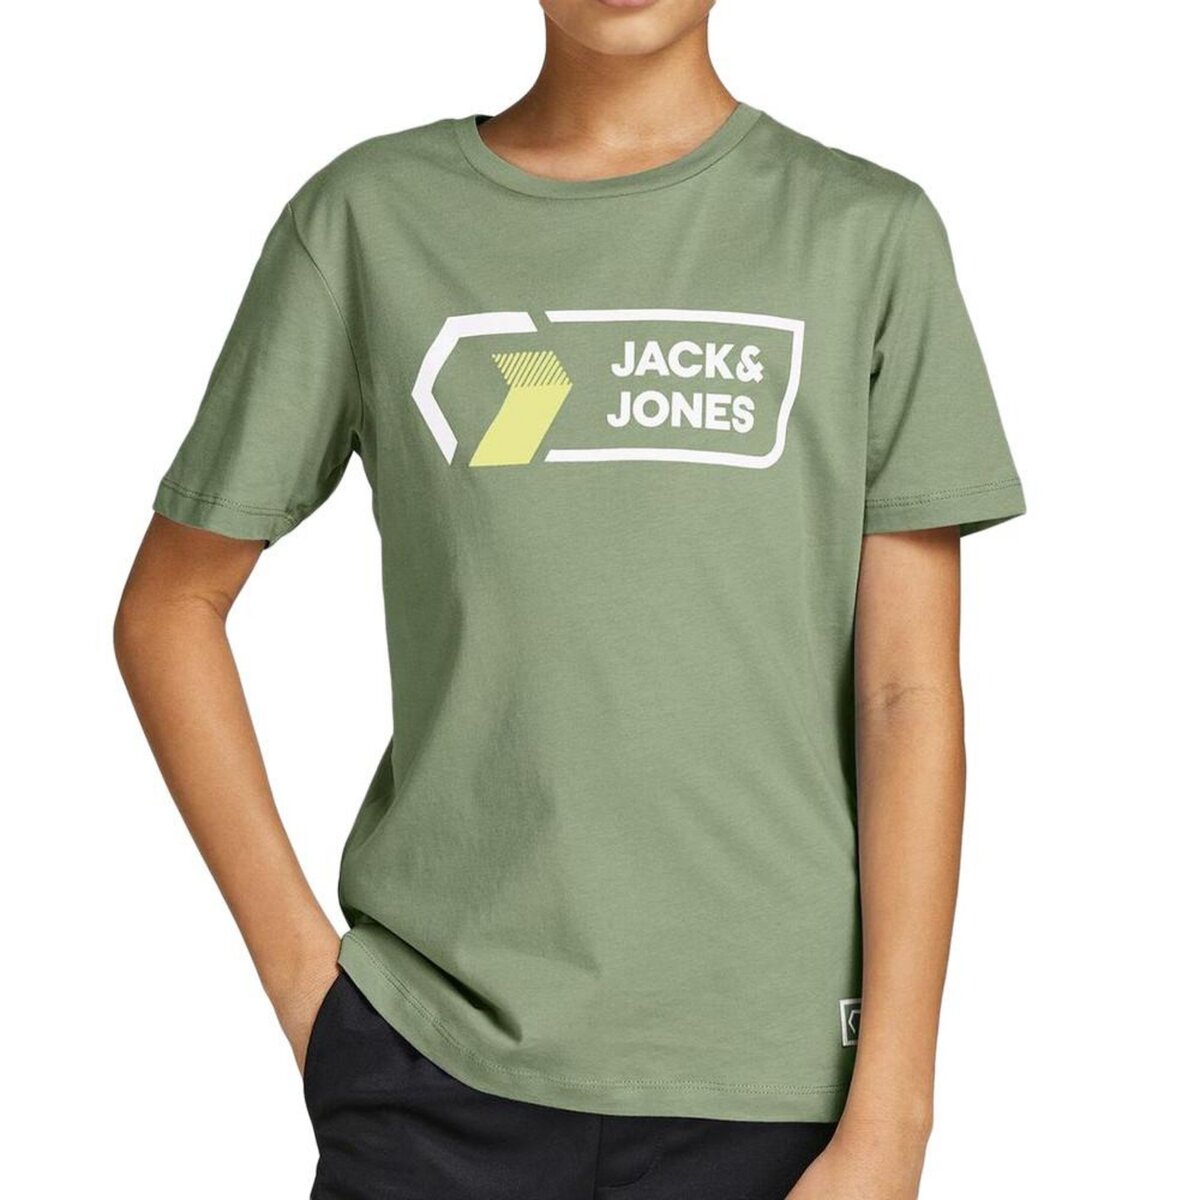  T-shirt Kaki Garçon Jack and Jones Cologan